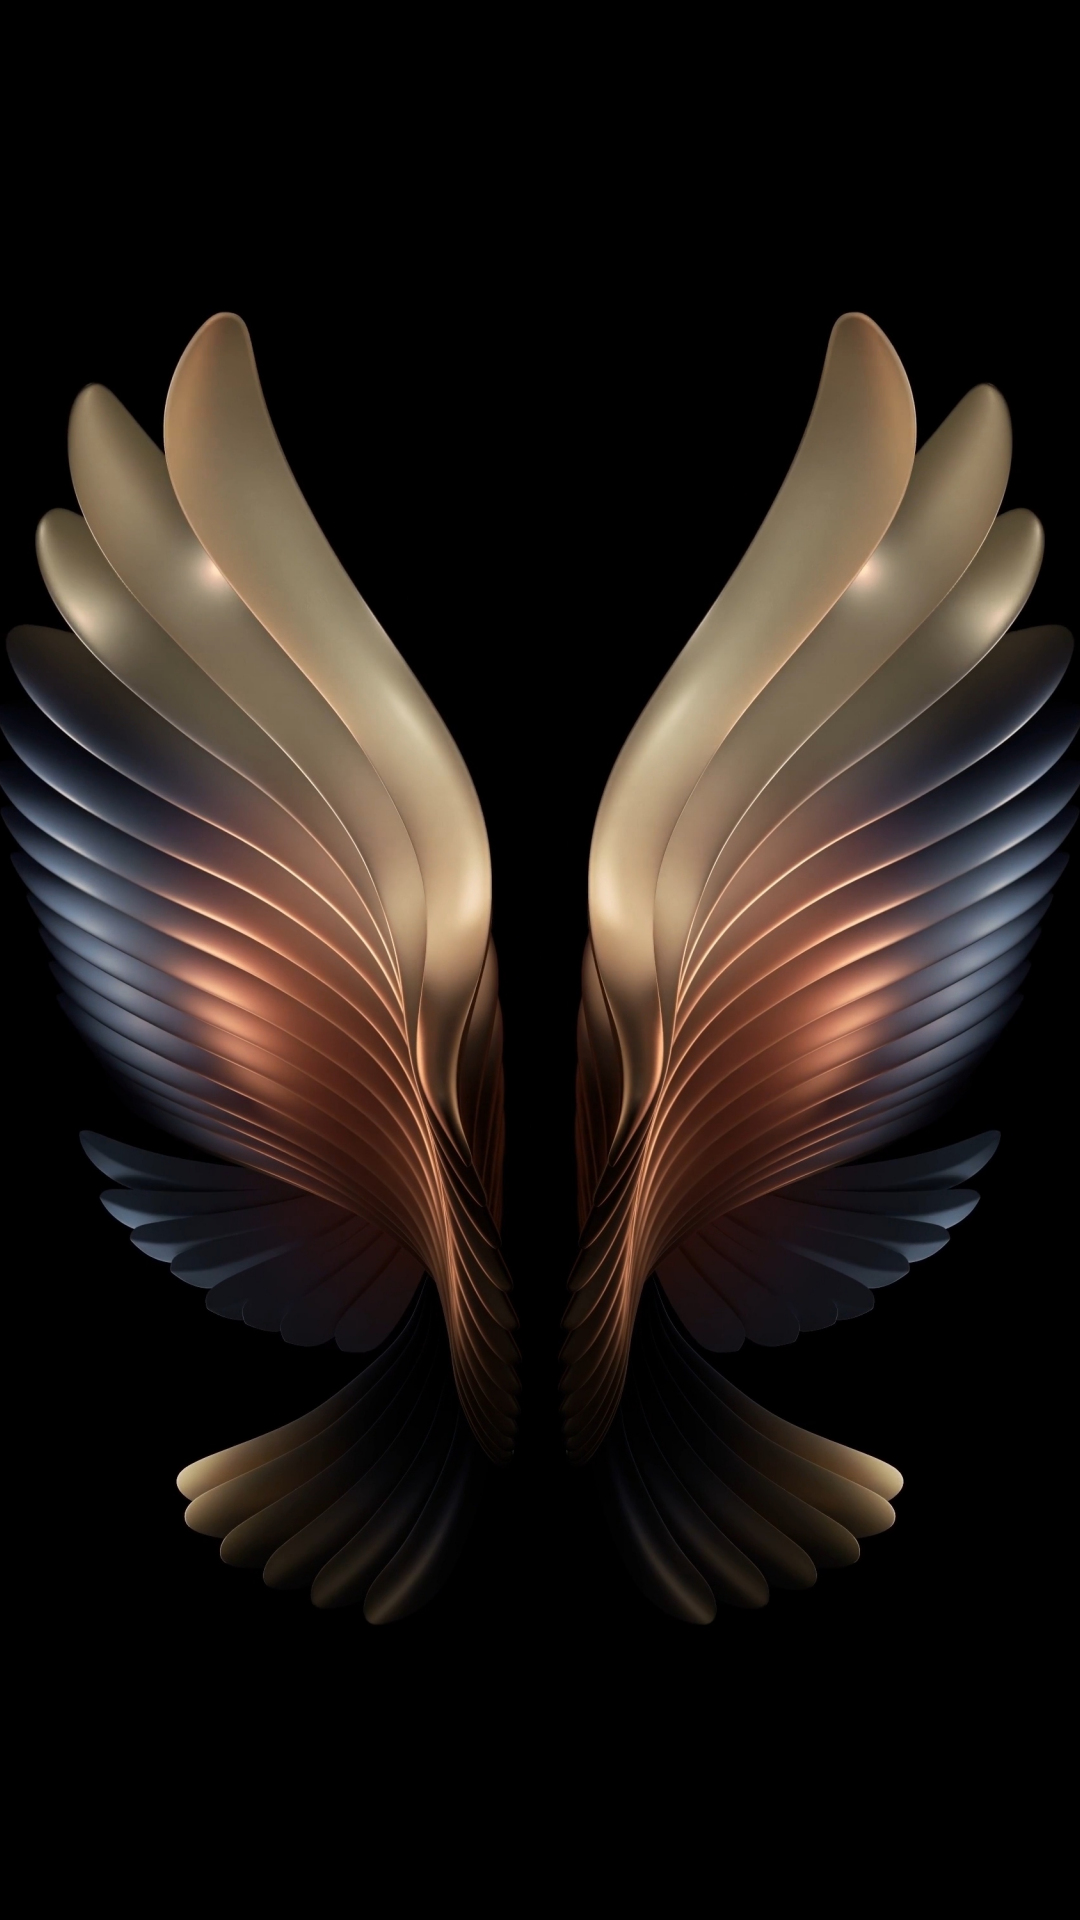 Amoled, angel wings, dark, 1080x1920 wallpaper